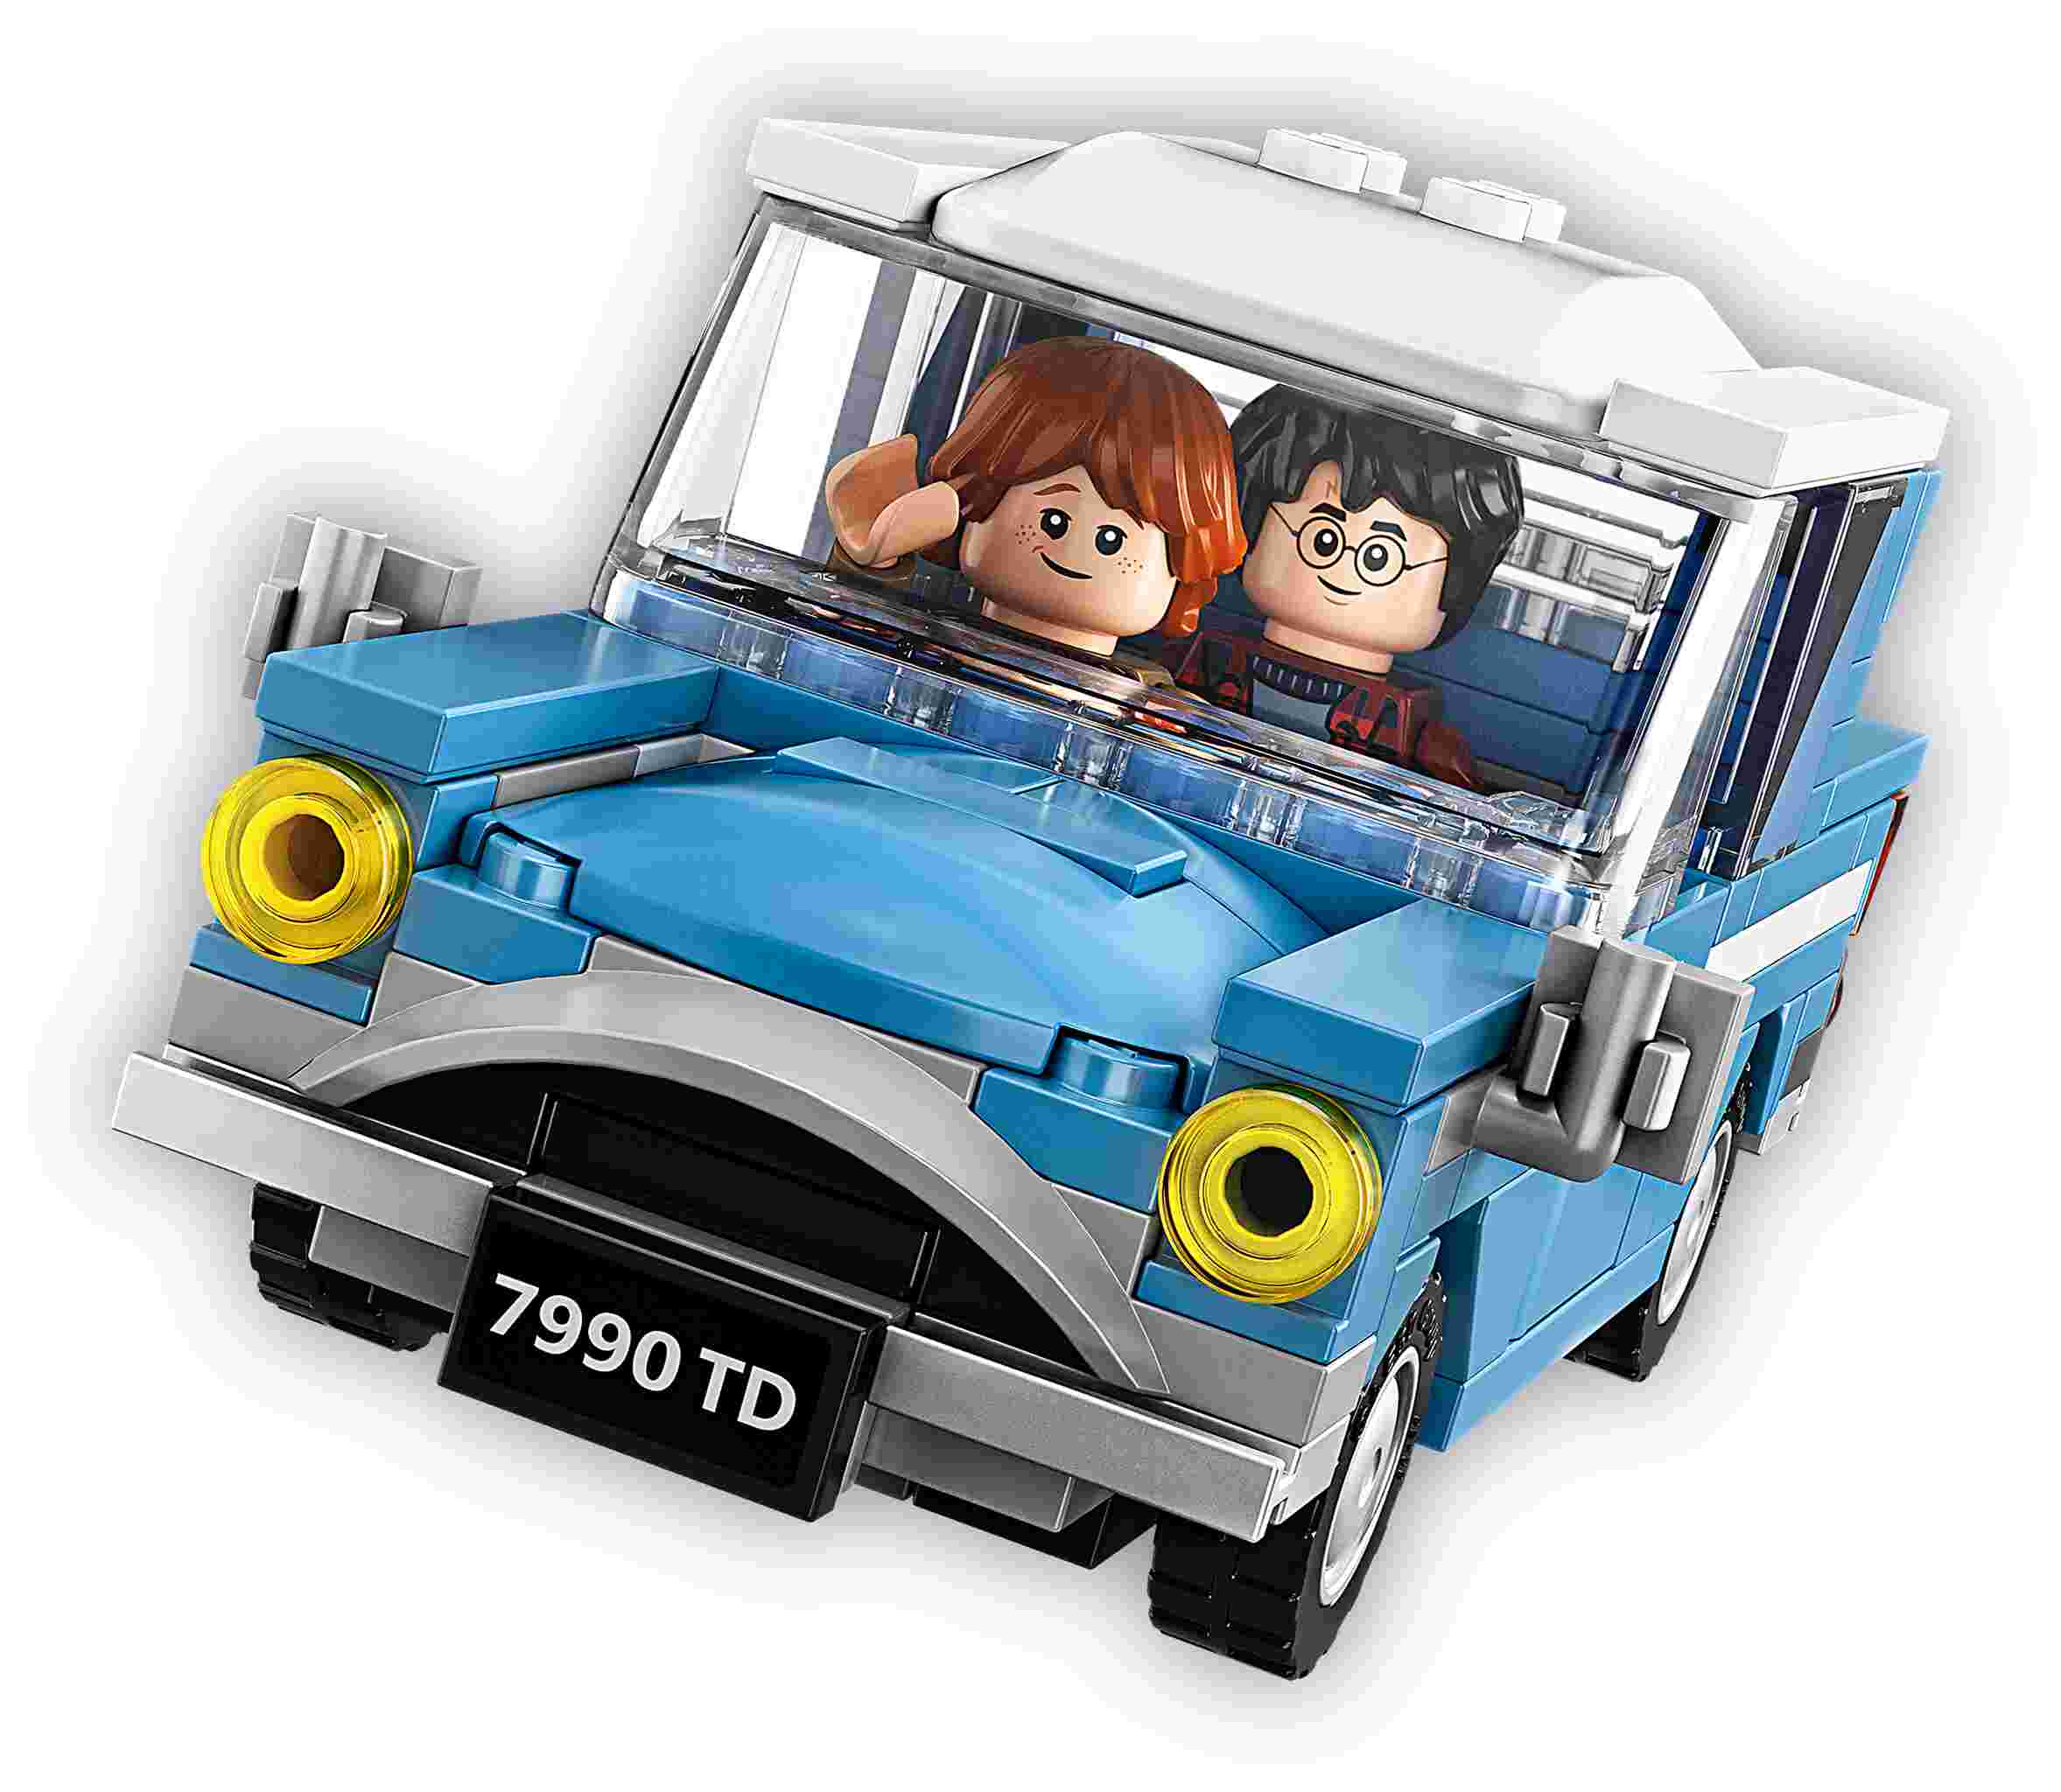 LEGO 75968 Harry Potter Ligusterweg 4, 6 Minifiguren, fliegender Ford Anglia